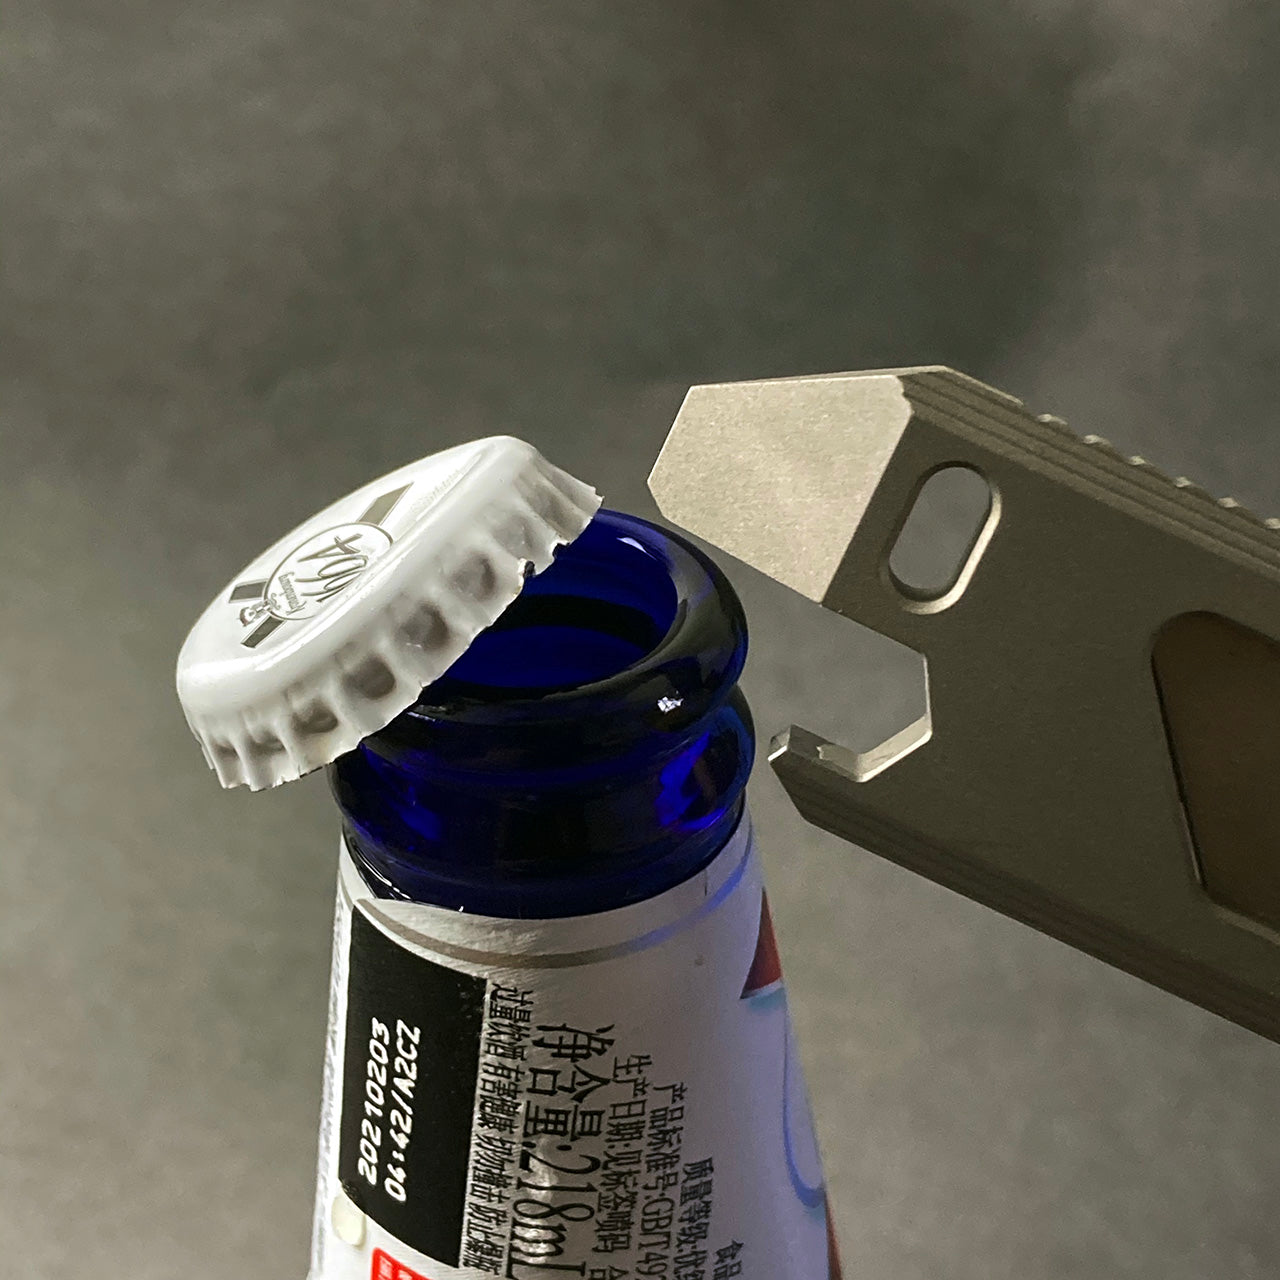 SnakeSword Honey Badger II Titanium Integrated Utility knife